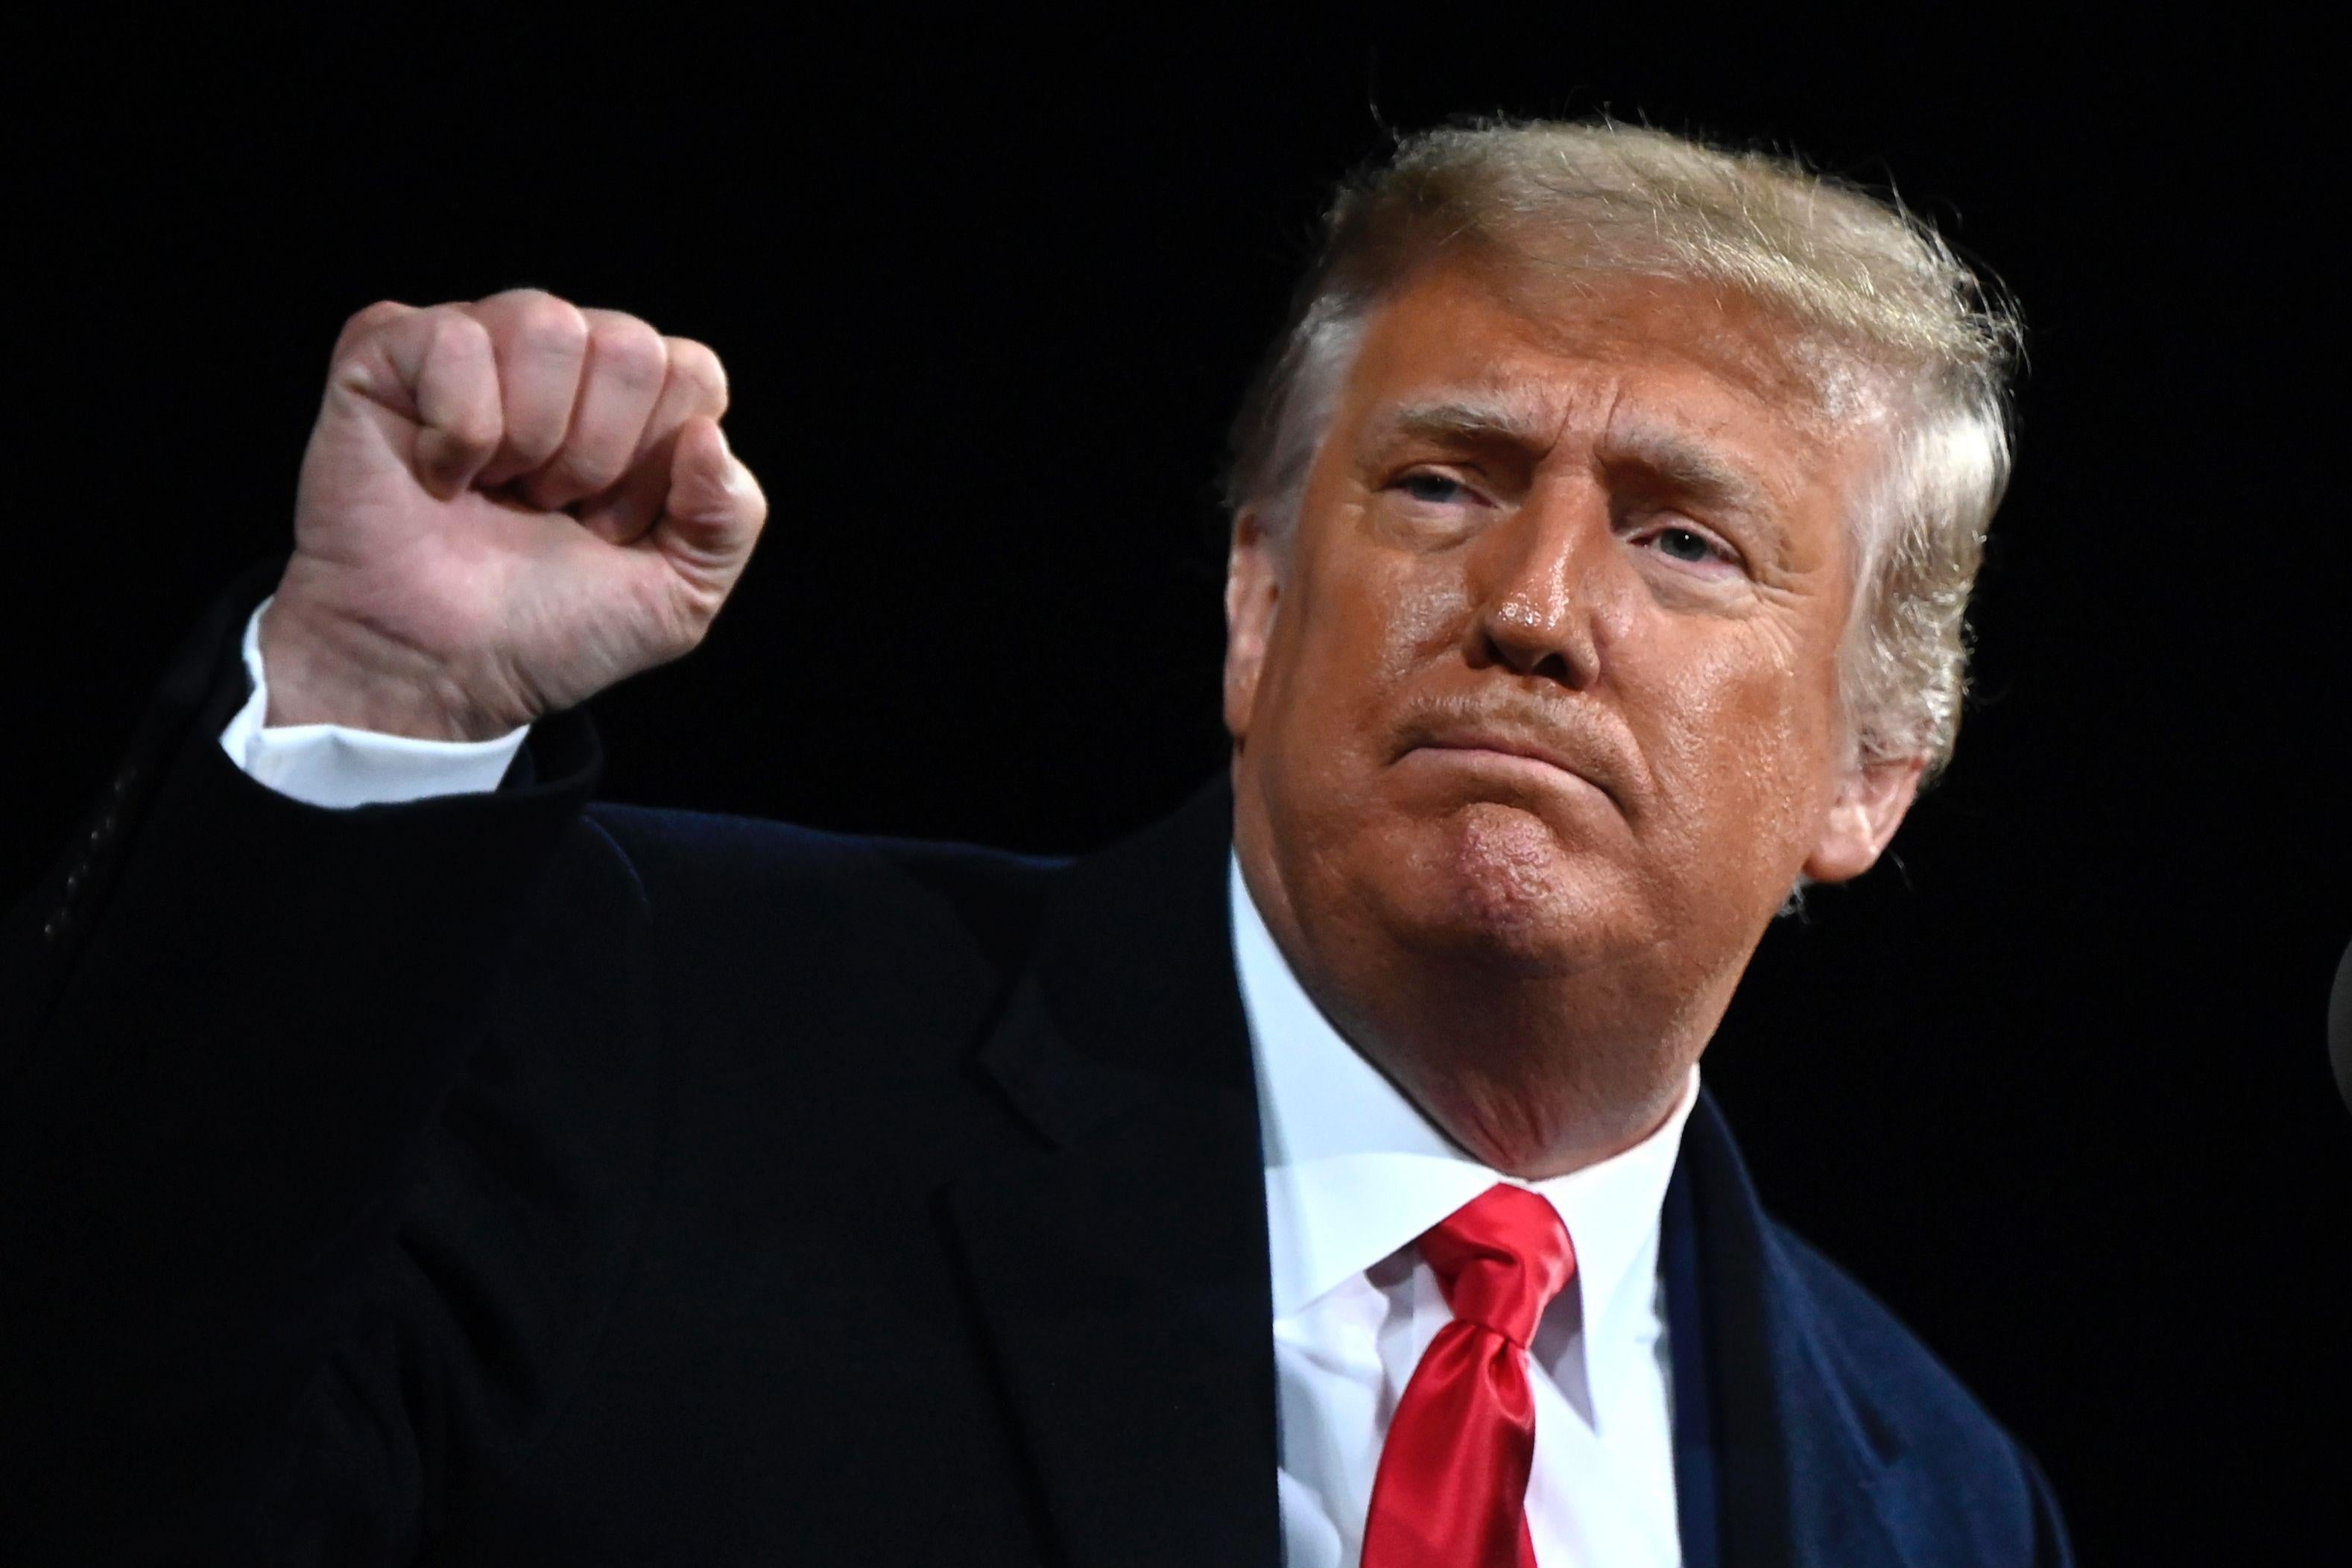 Donald Trump raises his fist as if in solidarity.